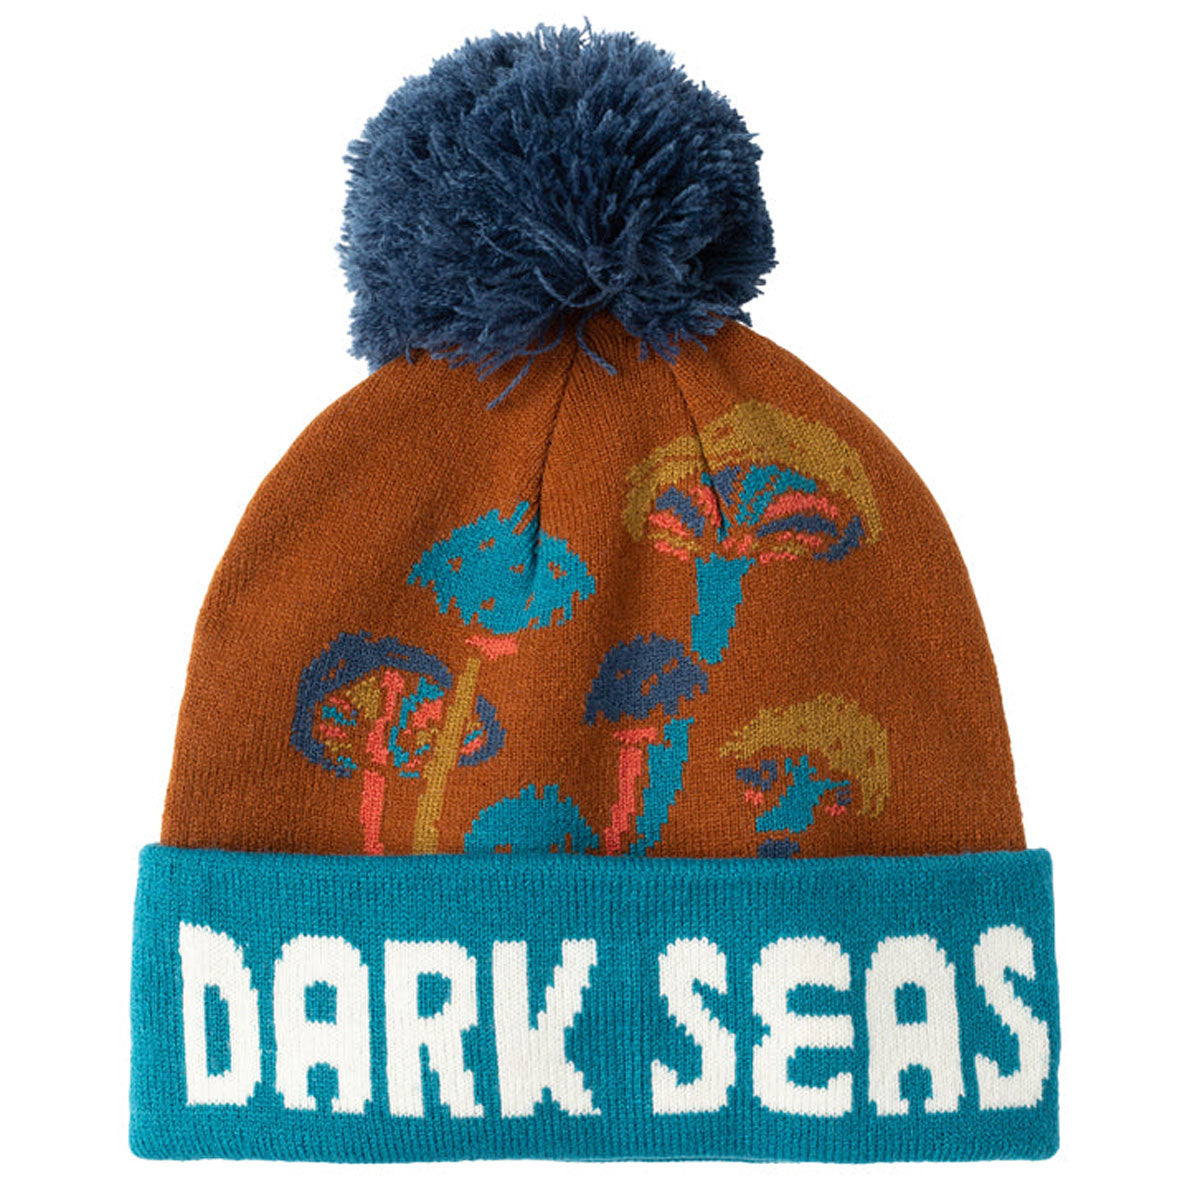 Dark Seas Azure Beanie - Ginger/Teal image 1